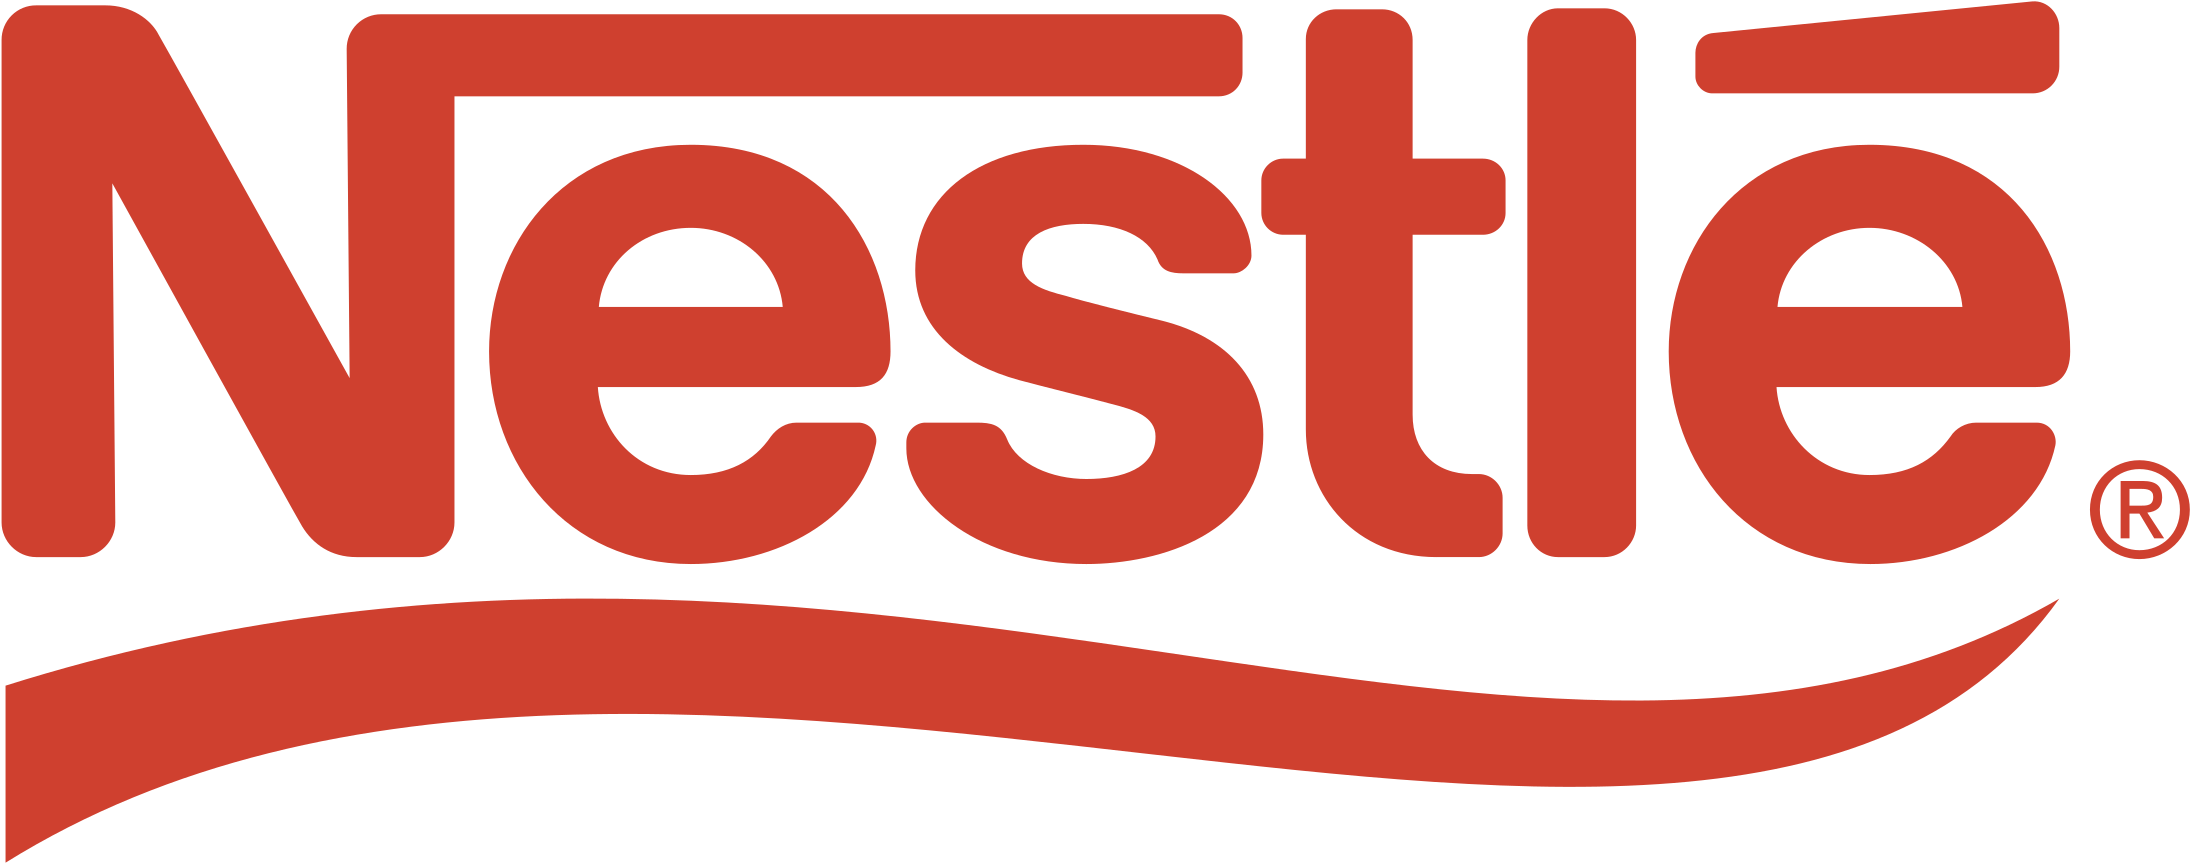 Nestlé Logo Download Free PNG